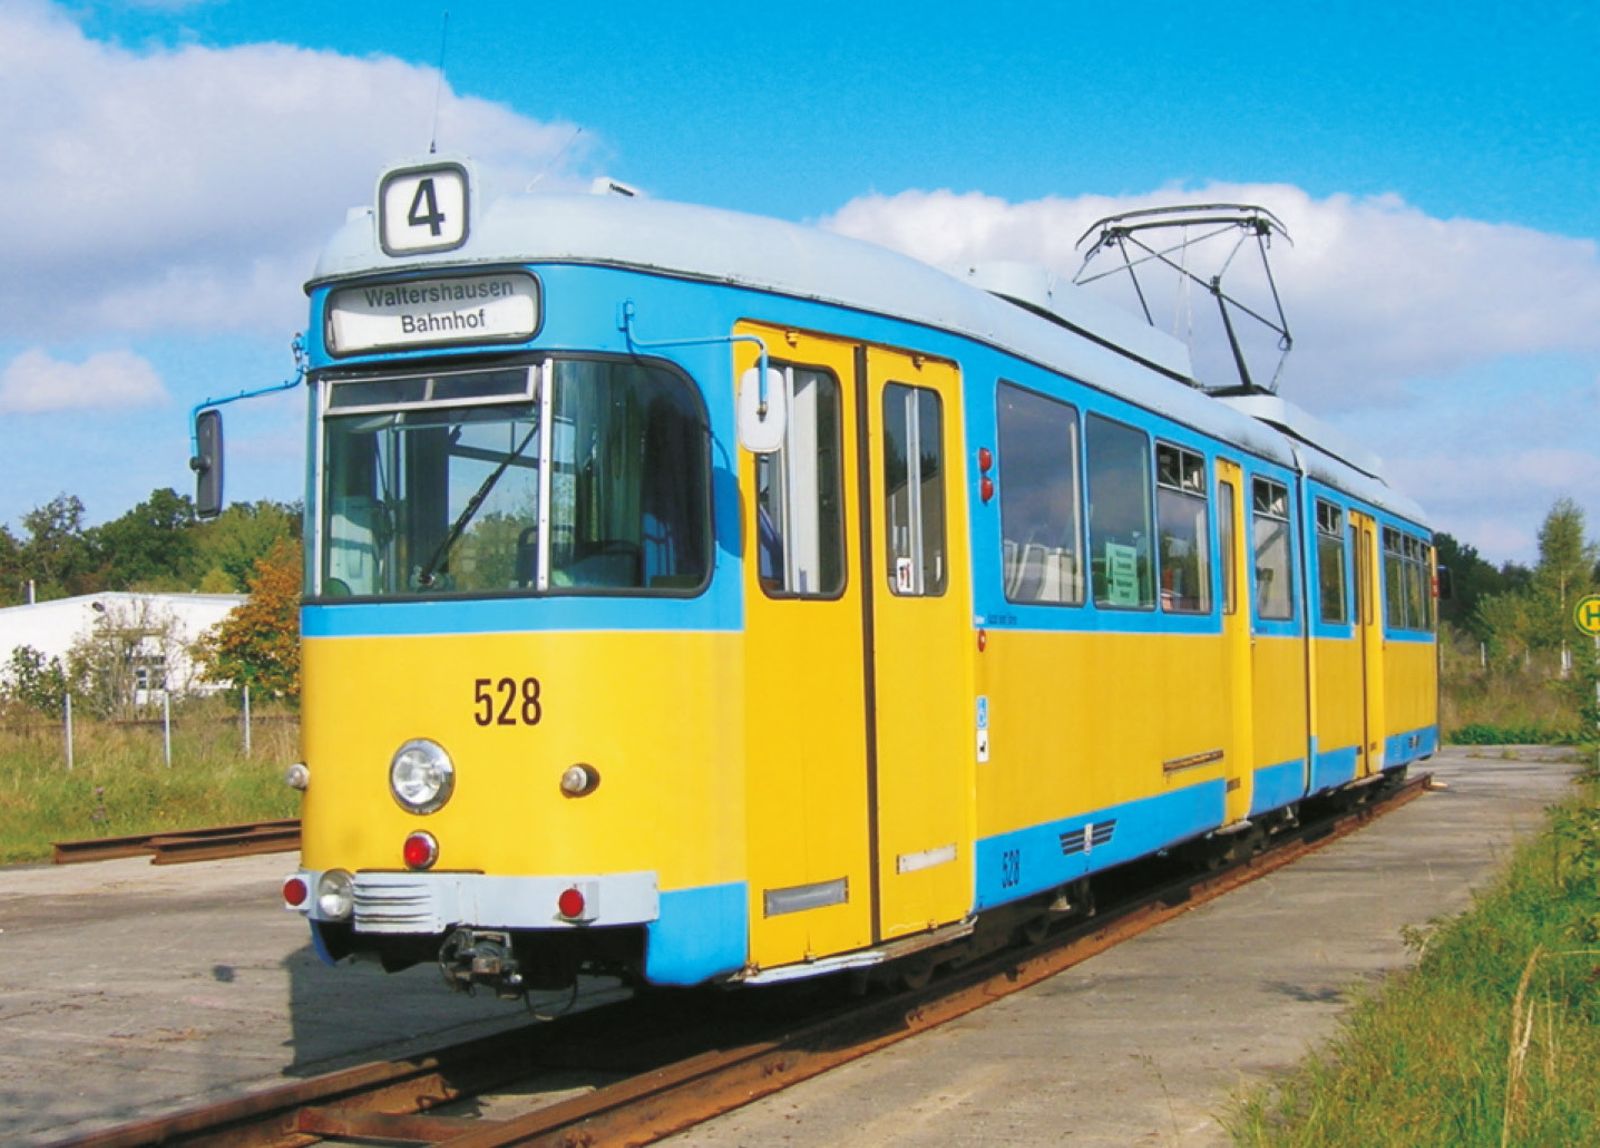 DÜWAG-Straßenbahngelenktriebzug 528 in Georgenthal.